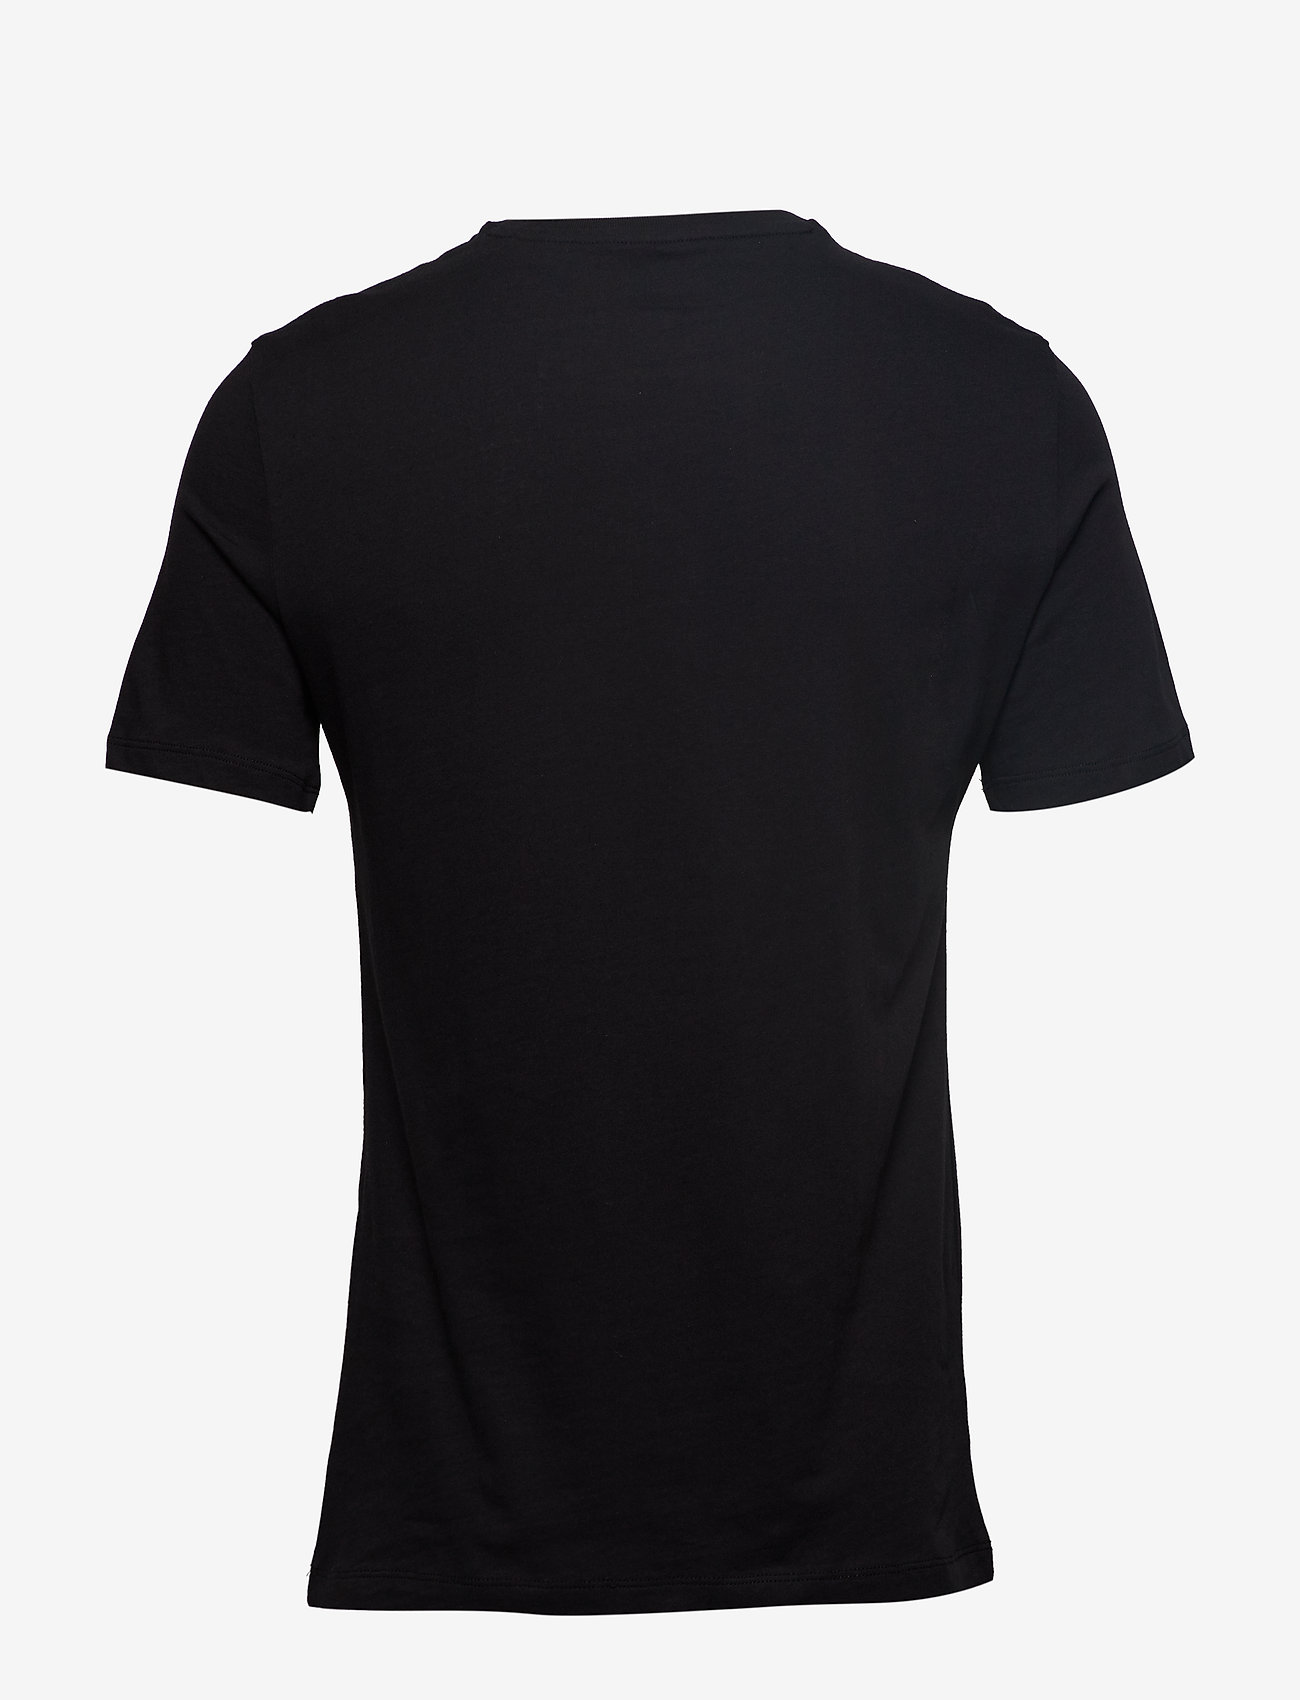 Armani Exchange - T-SHIRT - short-sleeved t-shirts - black - 1